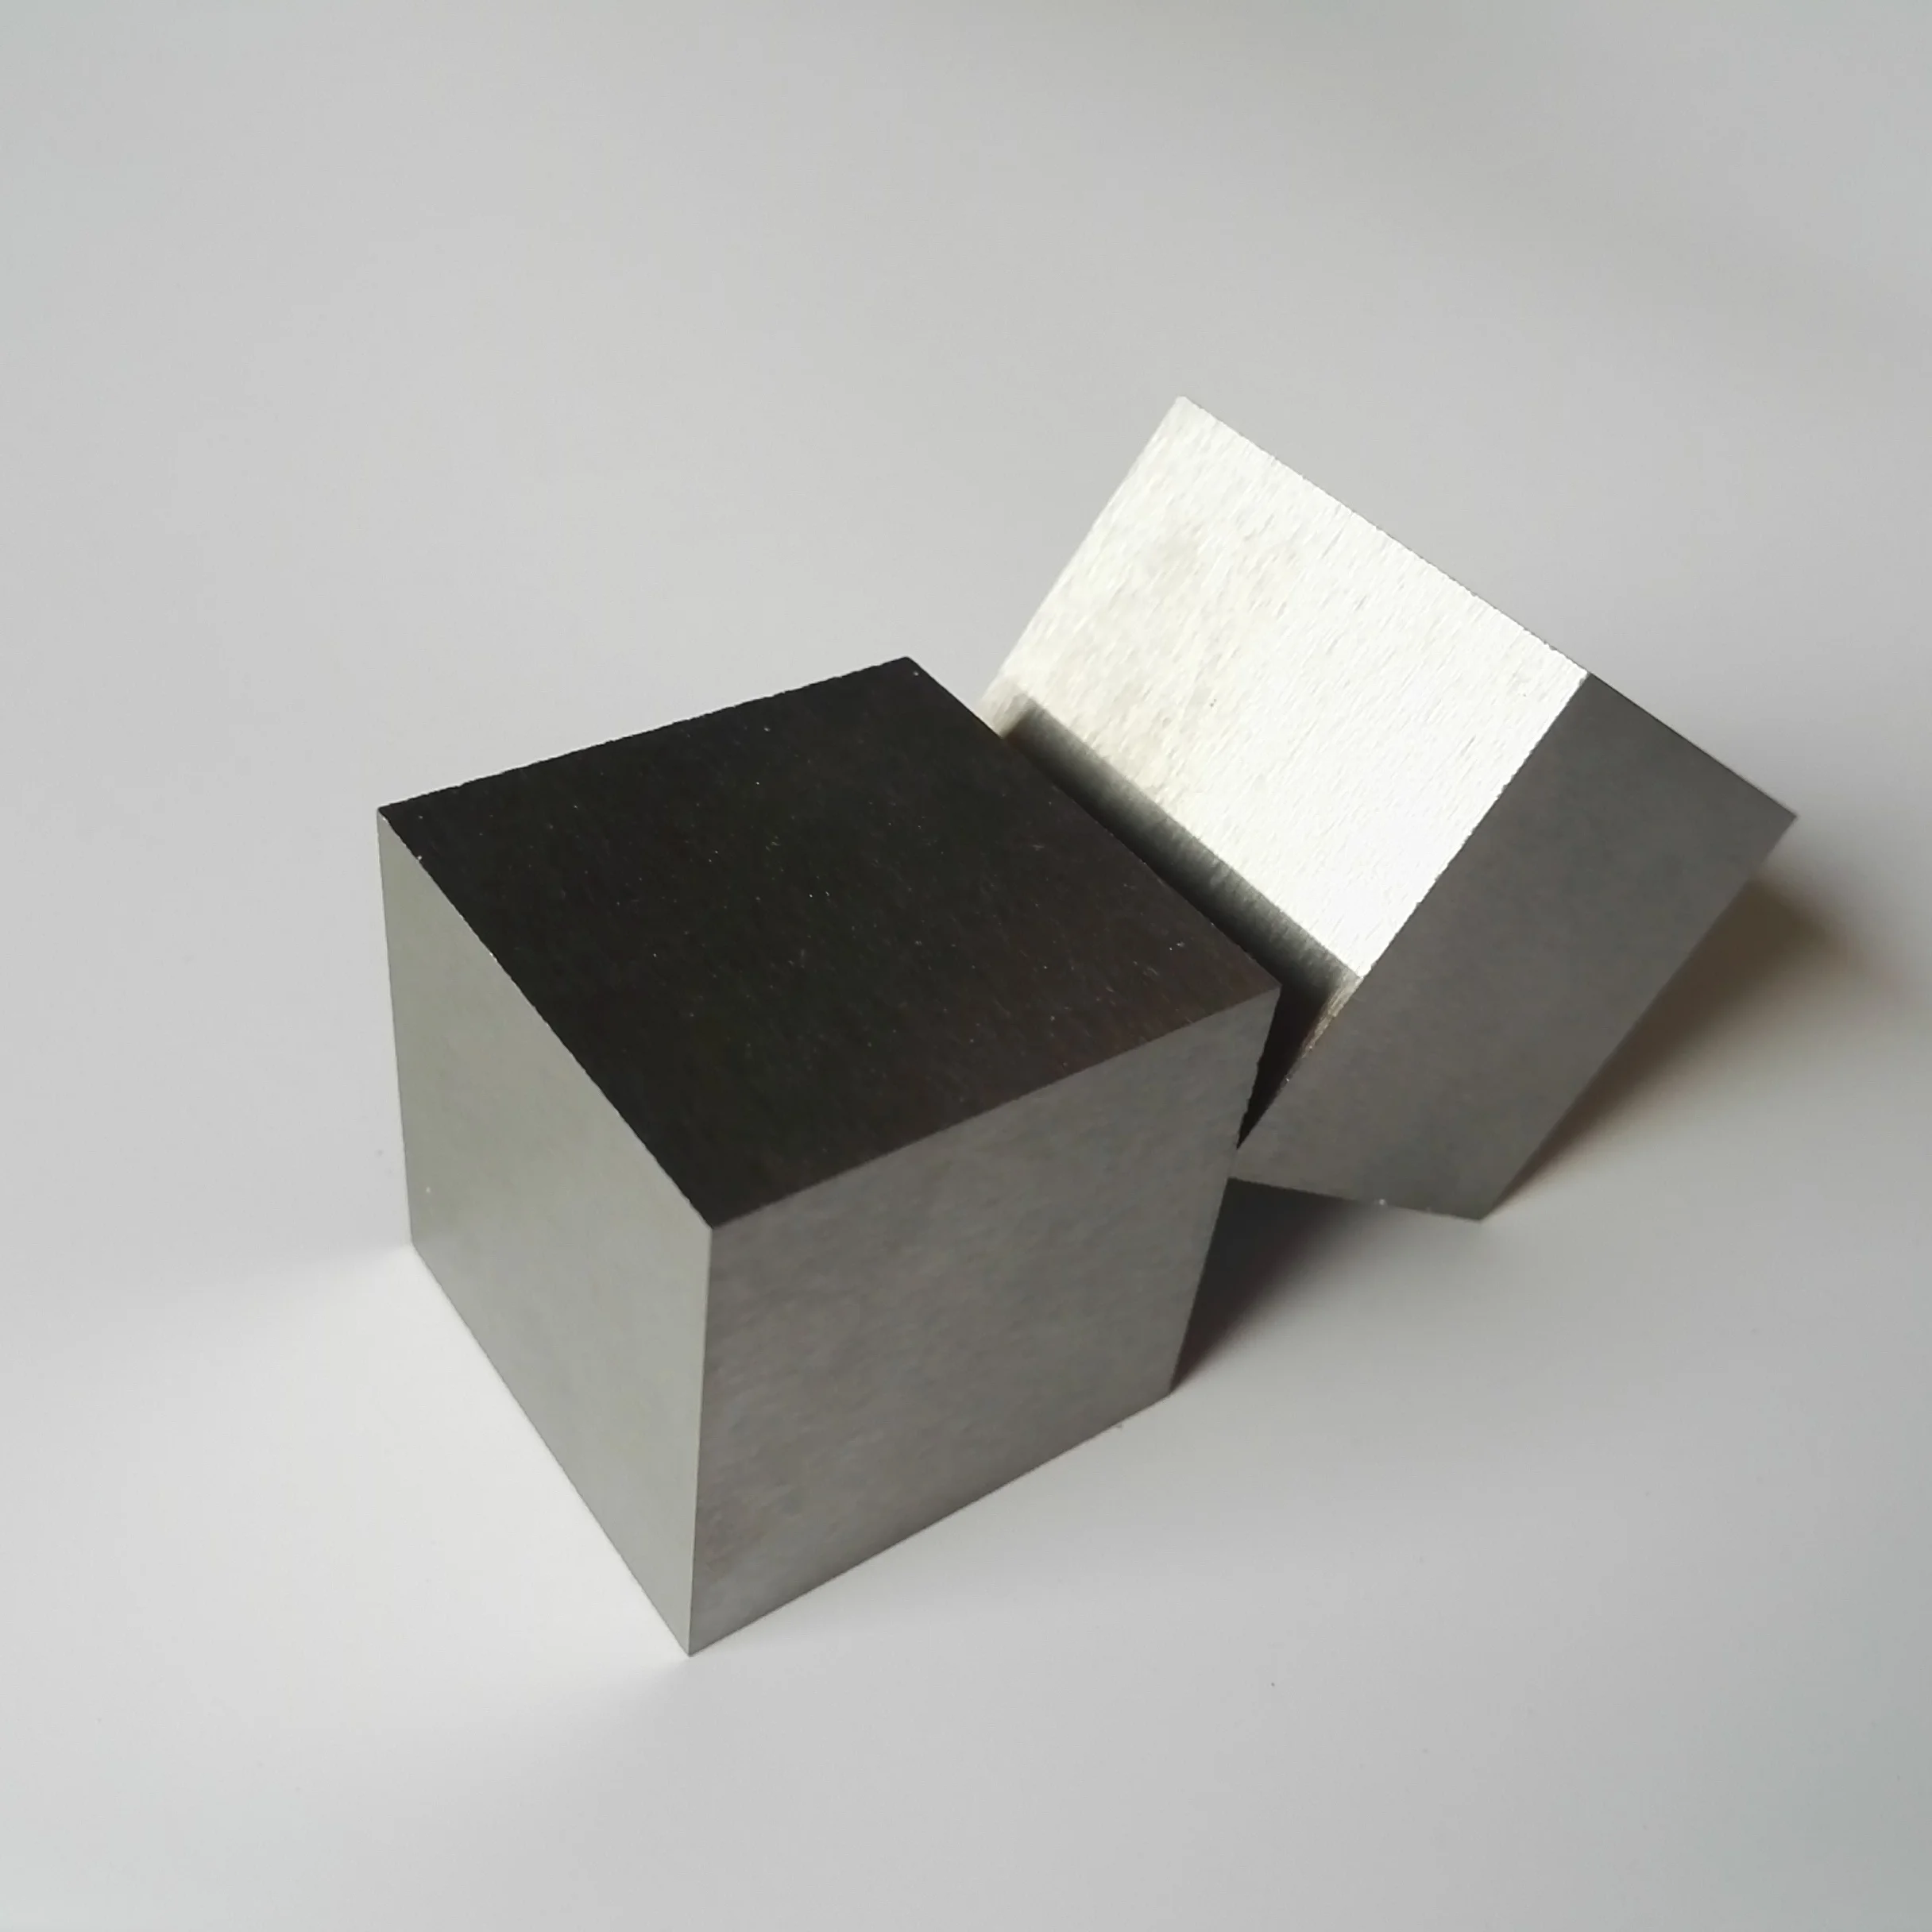 Installeren accent Verdachte 1 Kg Tungsten Cube And 1kg Tungsten Cube Pure Price For Sale - Buy Tungsten  Cube,1kg Tungsten Cube Price,1 Kg Tungsten Cube And 1kg Tungsten Cube  Product on Alibaba.com